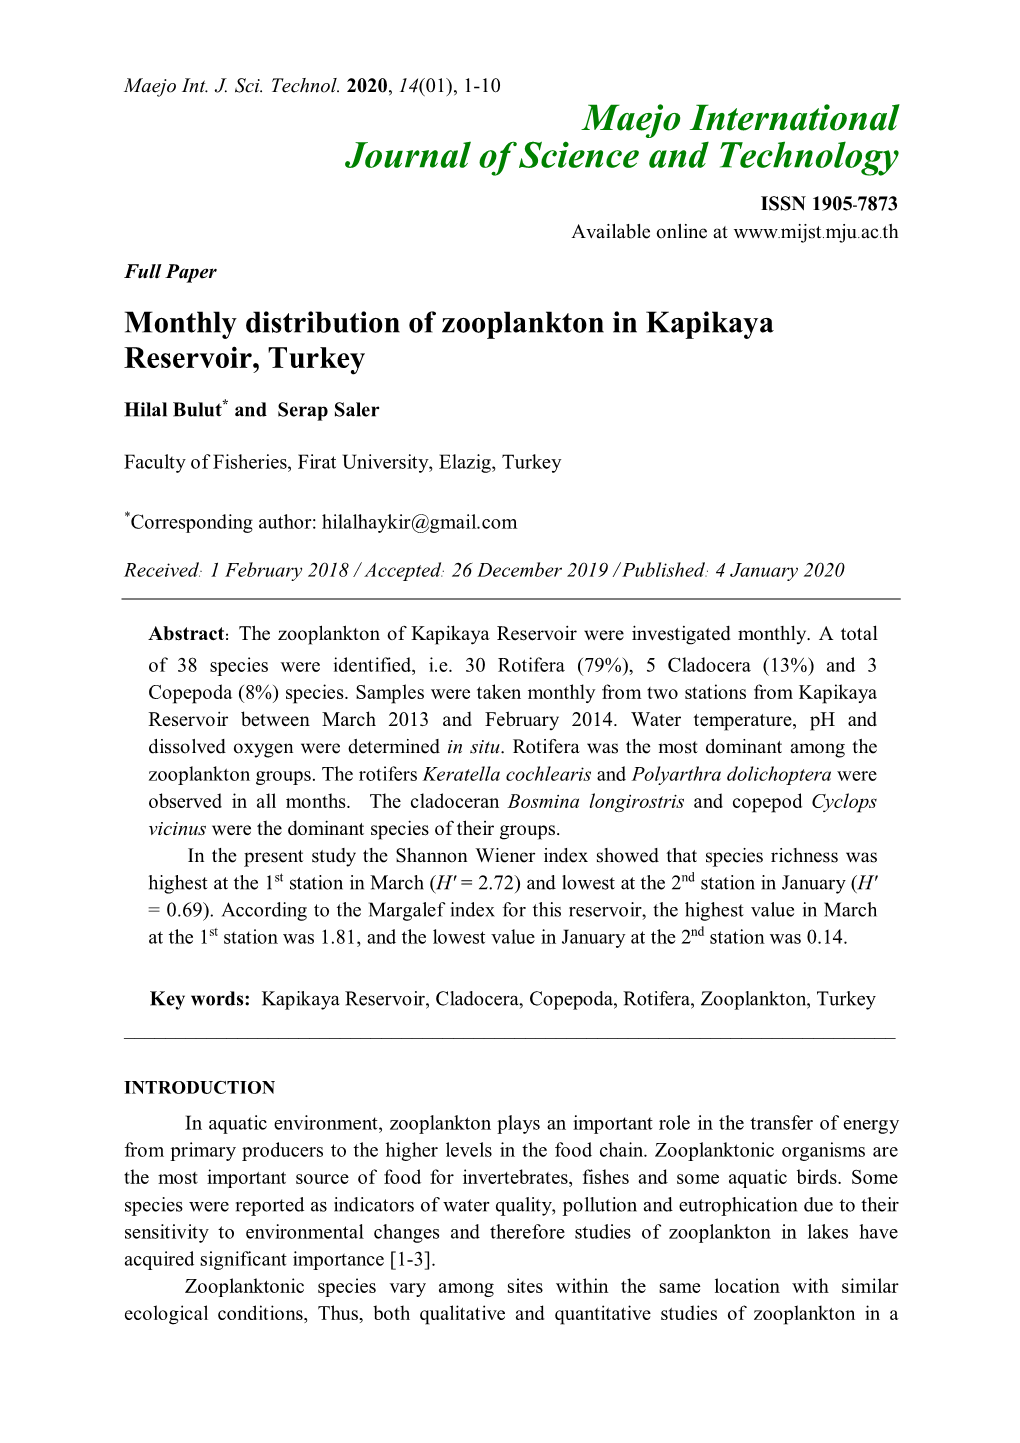 Monthly Distribution of Zooplankton in Kapikaya Reservoir, Turkey